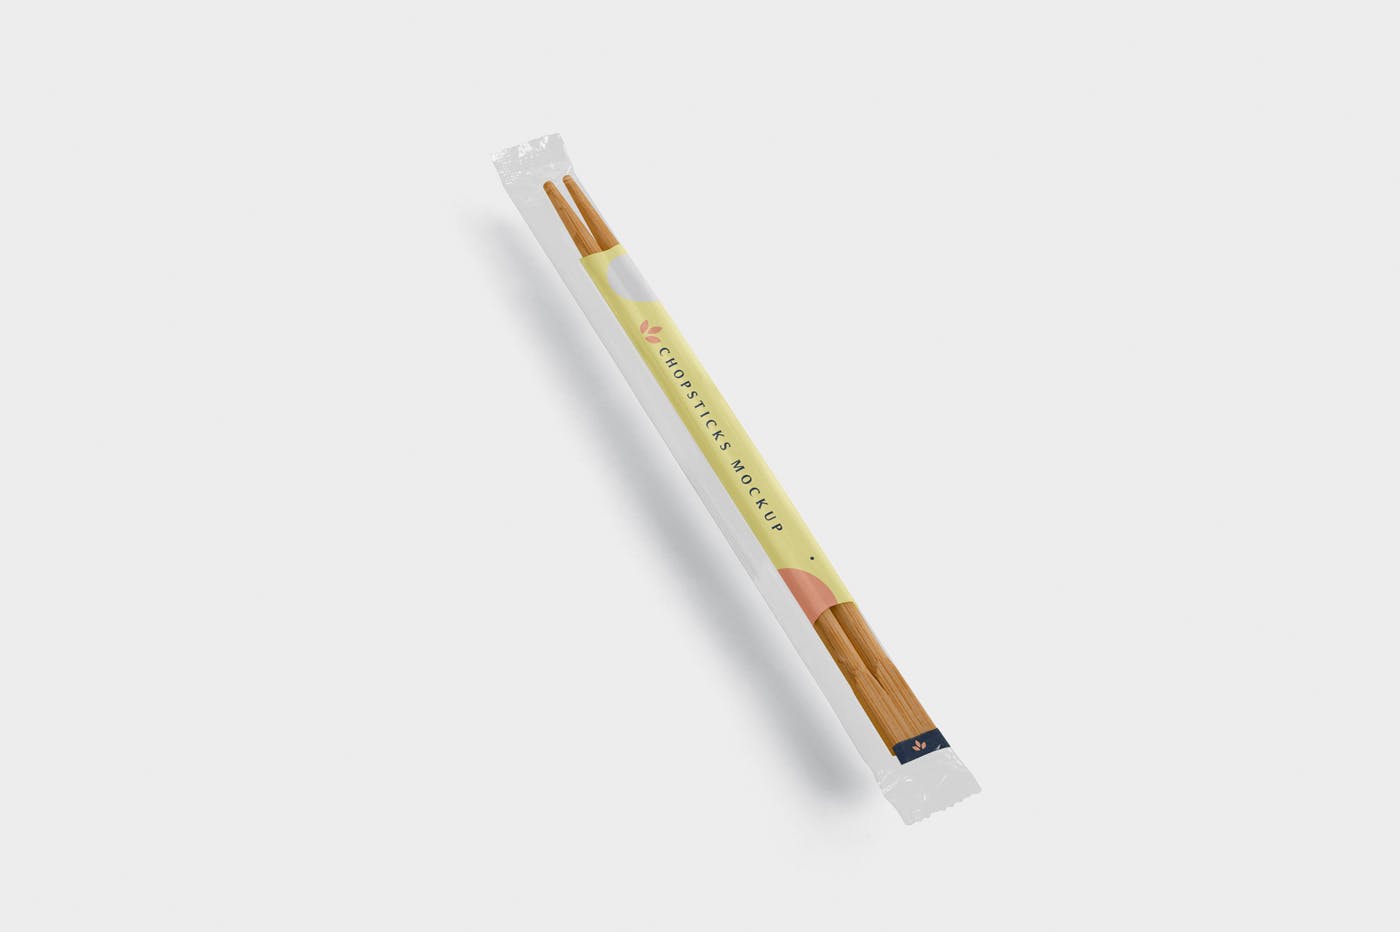 筷子透明包装设计效果图样机 Chopsticks Mockup in Transparent Packaging插图(3)